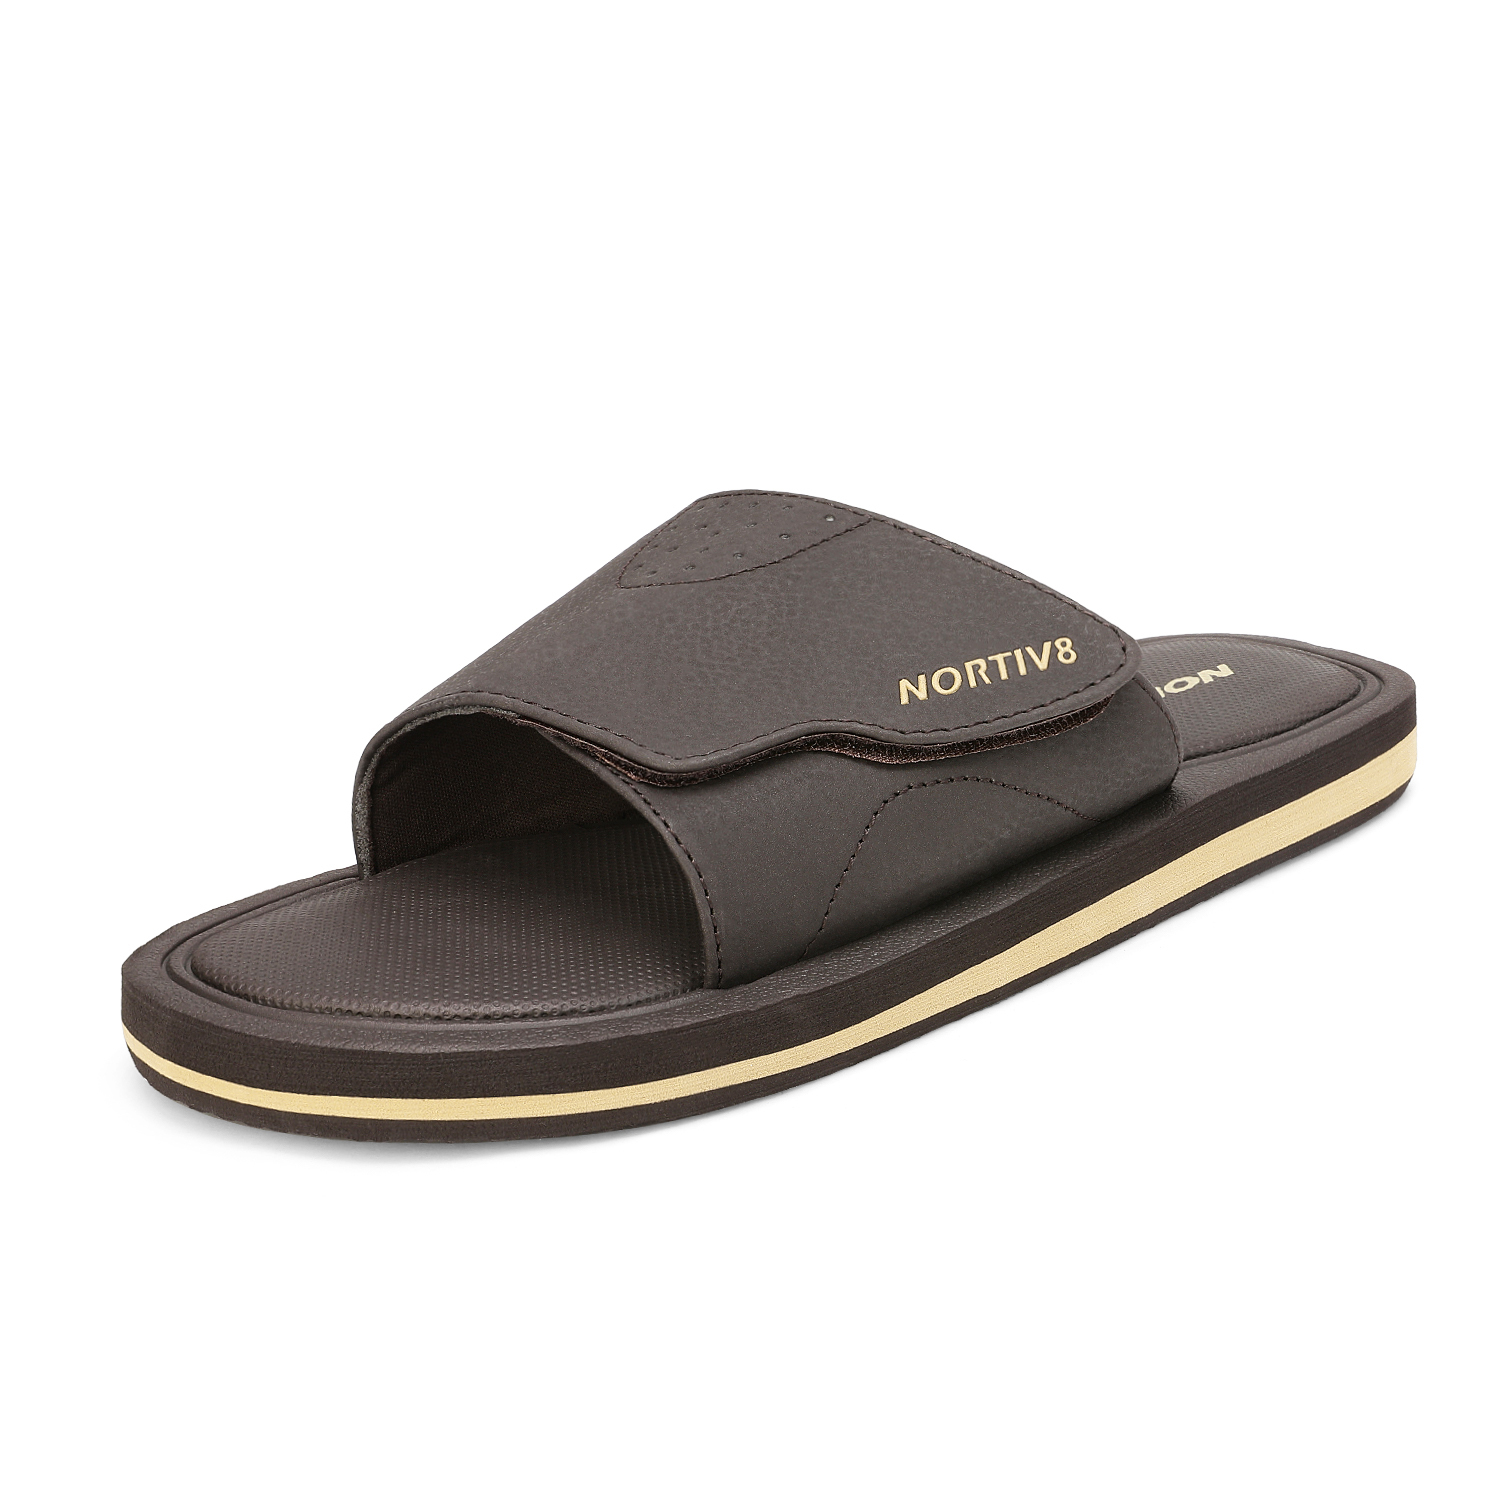 Nortiv 8 Men's Memory Foam Adjustable Slide Sandals Comfort Lightweight Beach Shoes Summer Outdoor Slipper Fusion Dark/Brown Size 15 - image 1 of 5